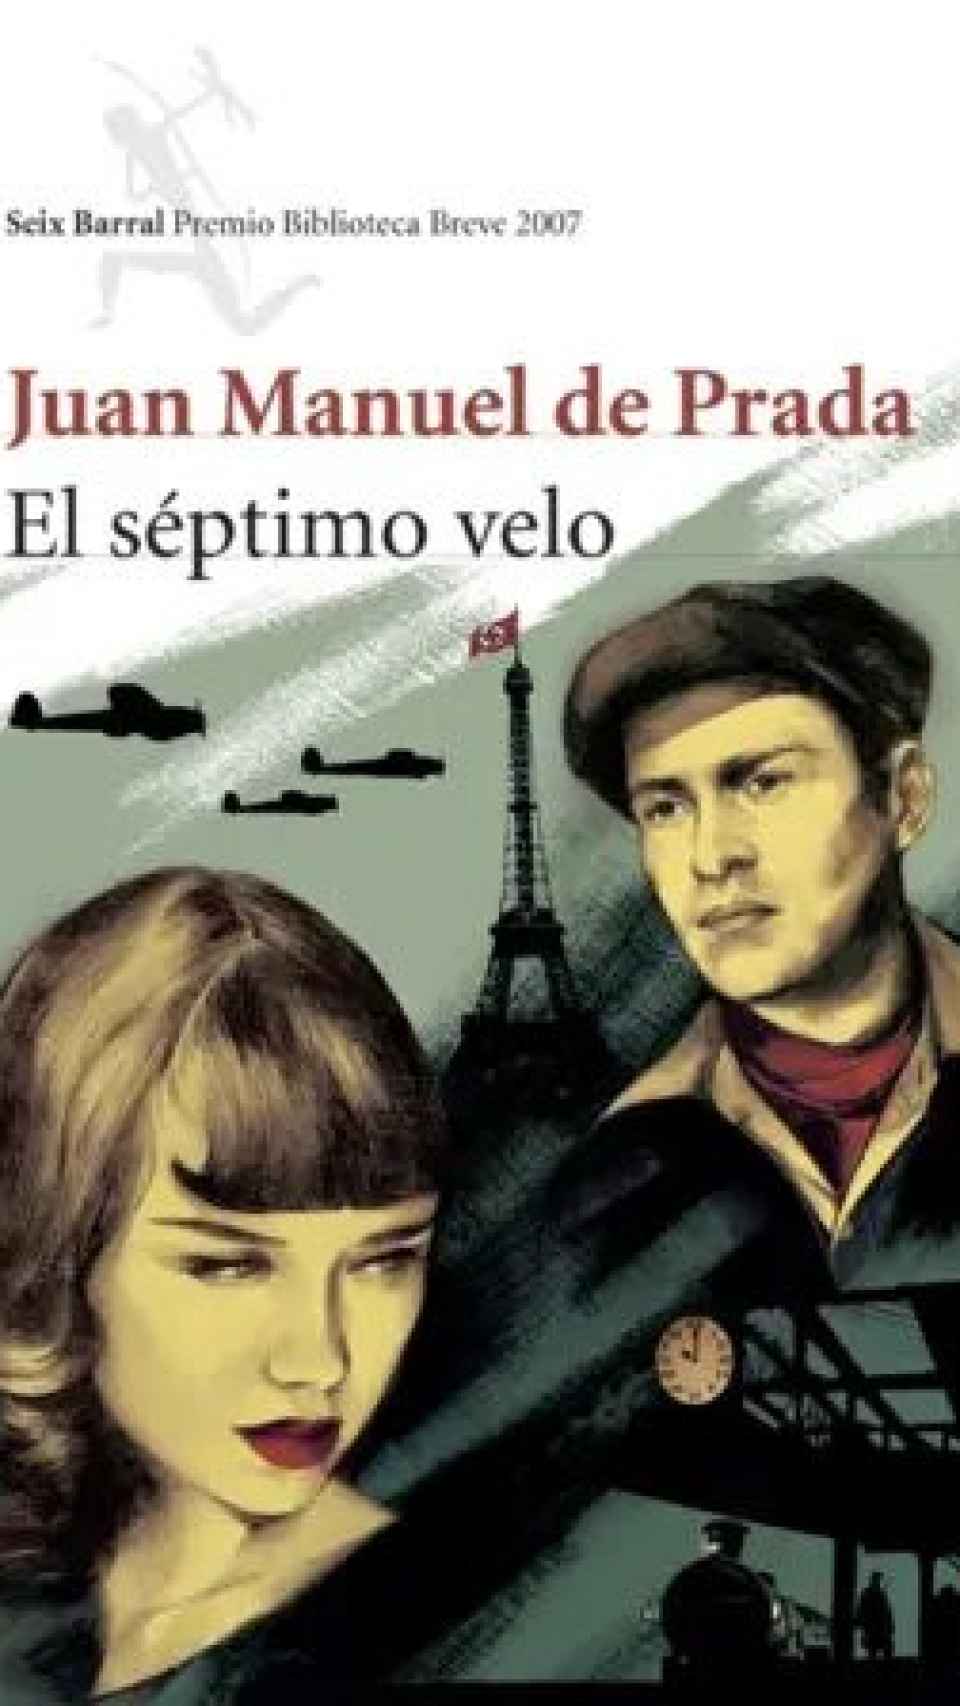 Libro de Juan Manuel de Prada